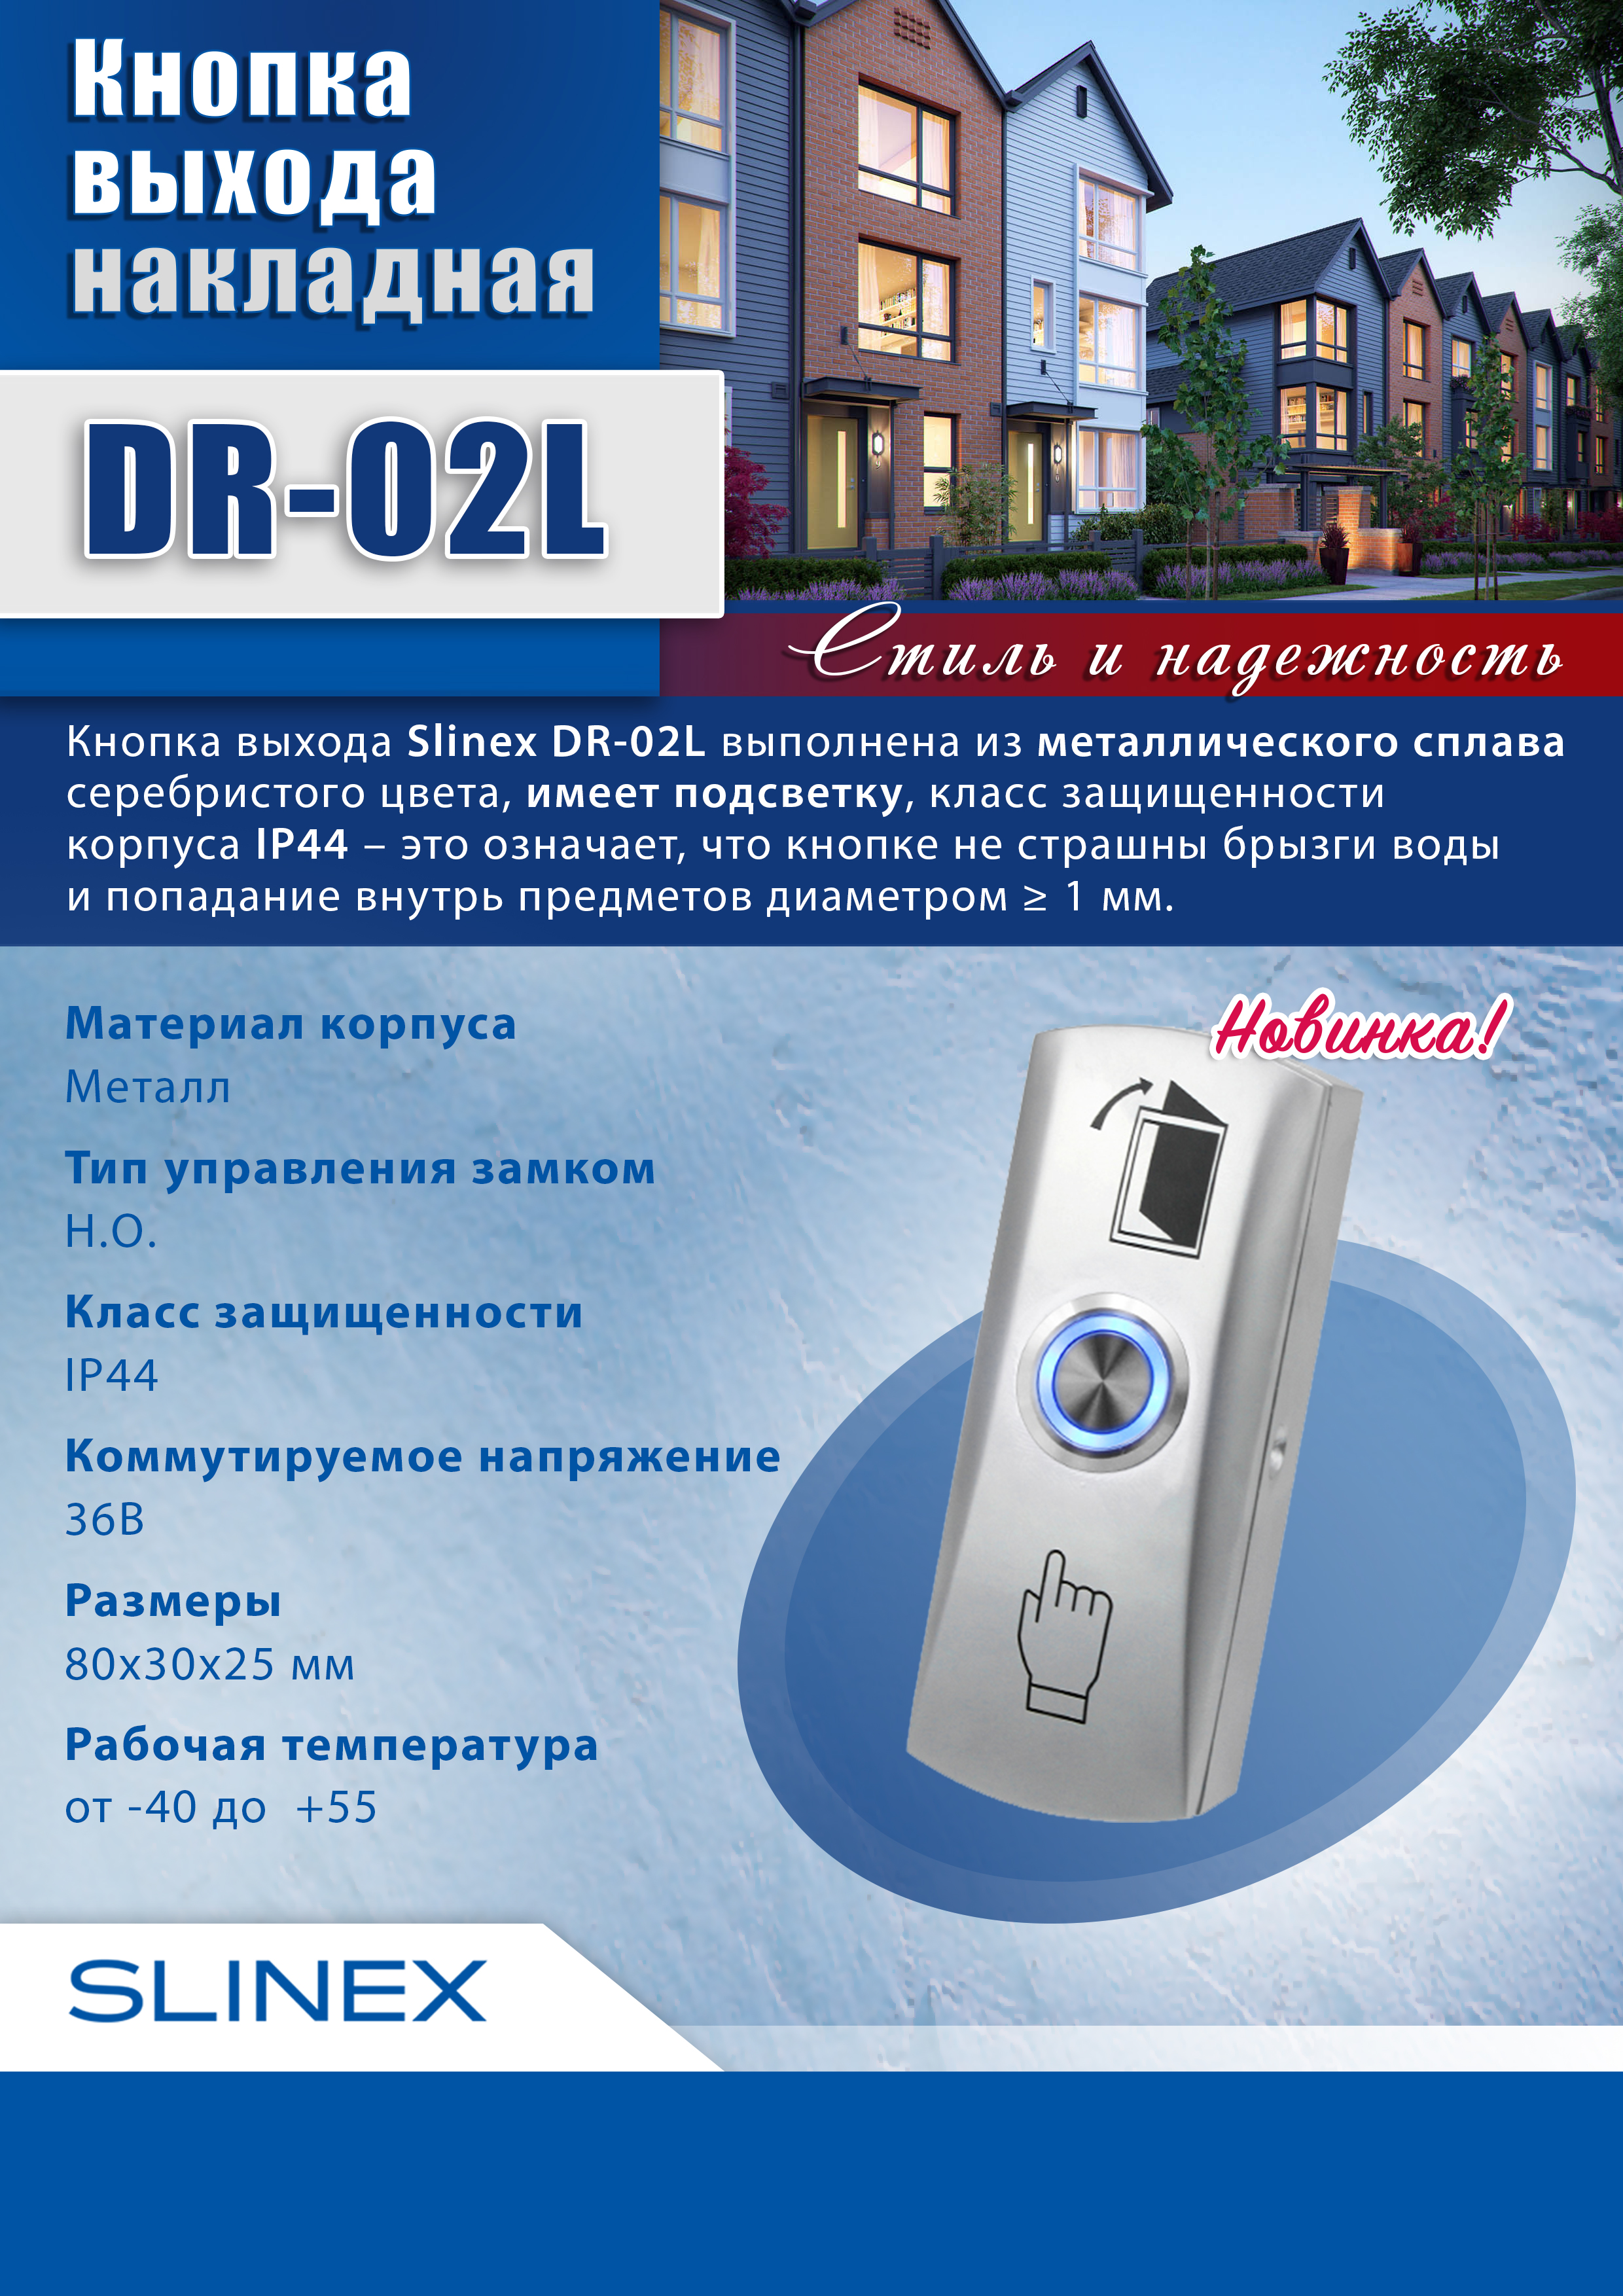 Кнопка выхода DR-02L